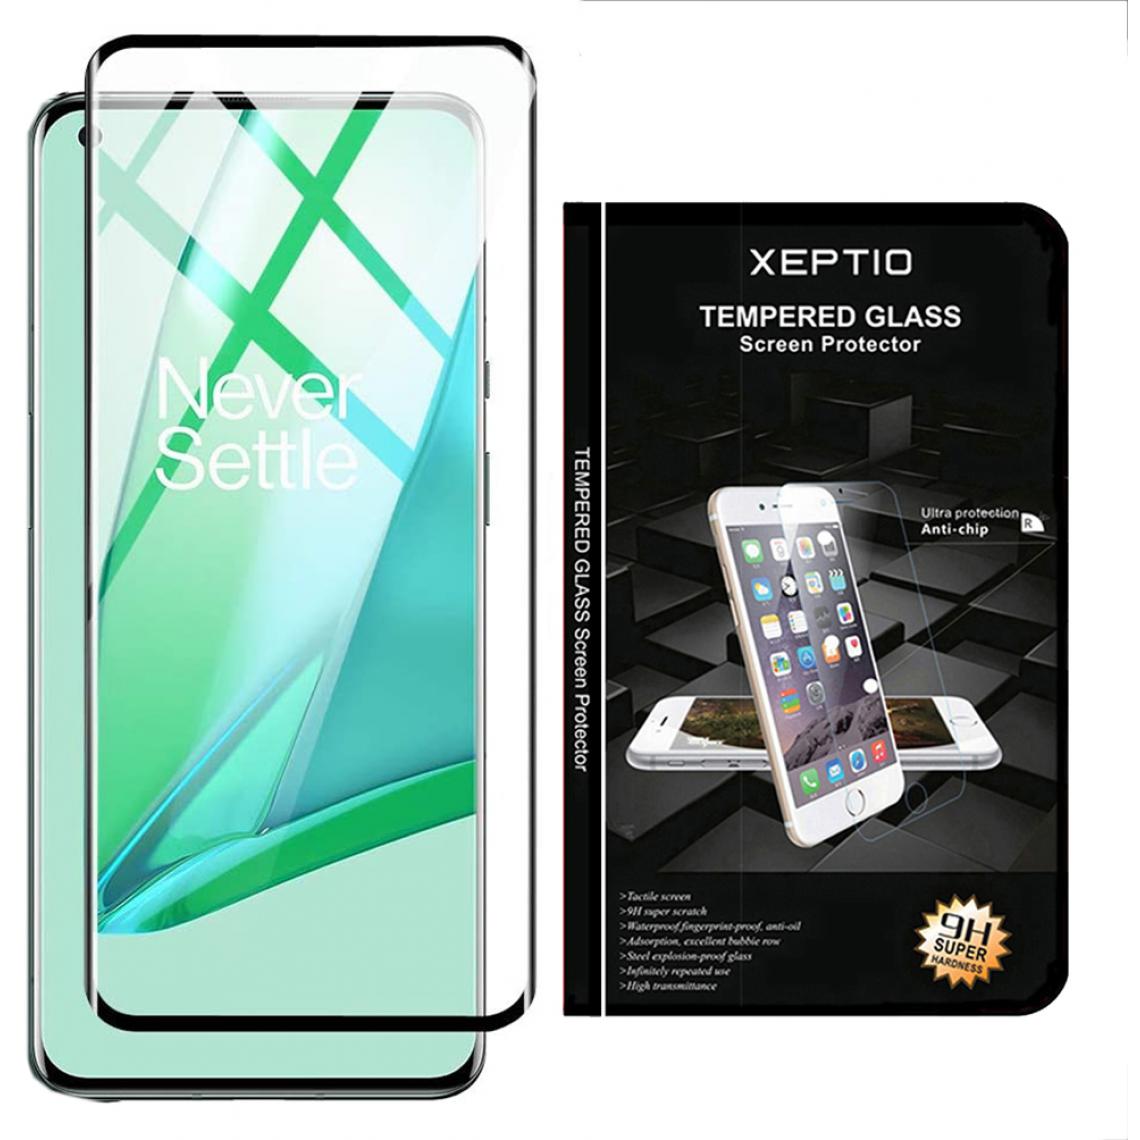 Xeptio - Protection d'écran OnePlus 9 PRO / One Plus 9 PRO 5G Verre trempé - Tempered Glass Screen vitre Protecteur d'écran - Accessoires - Protection écran smartphone